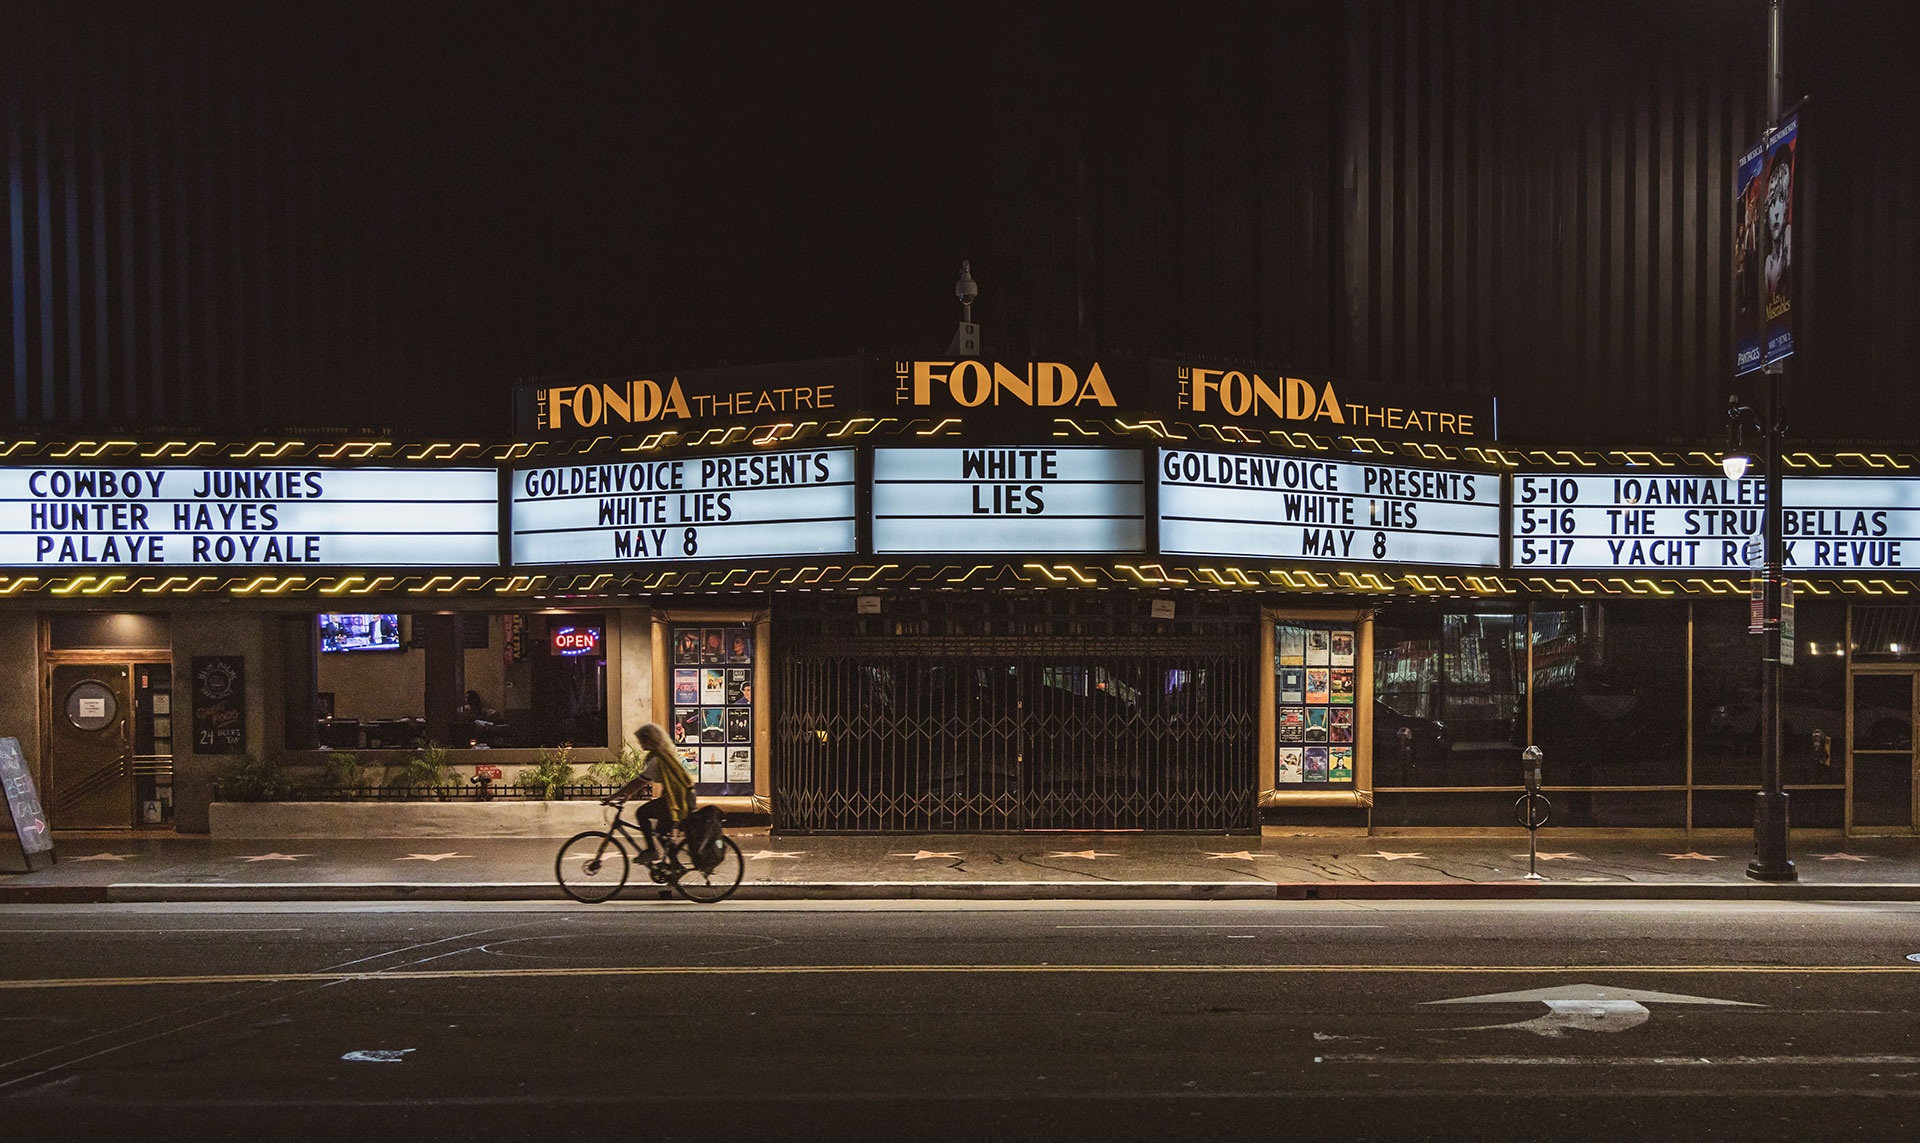 The Fonda-Theatre Hollywood